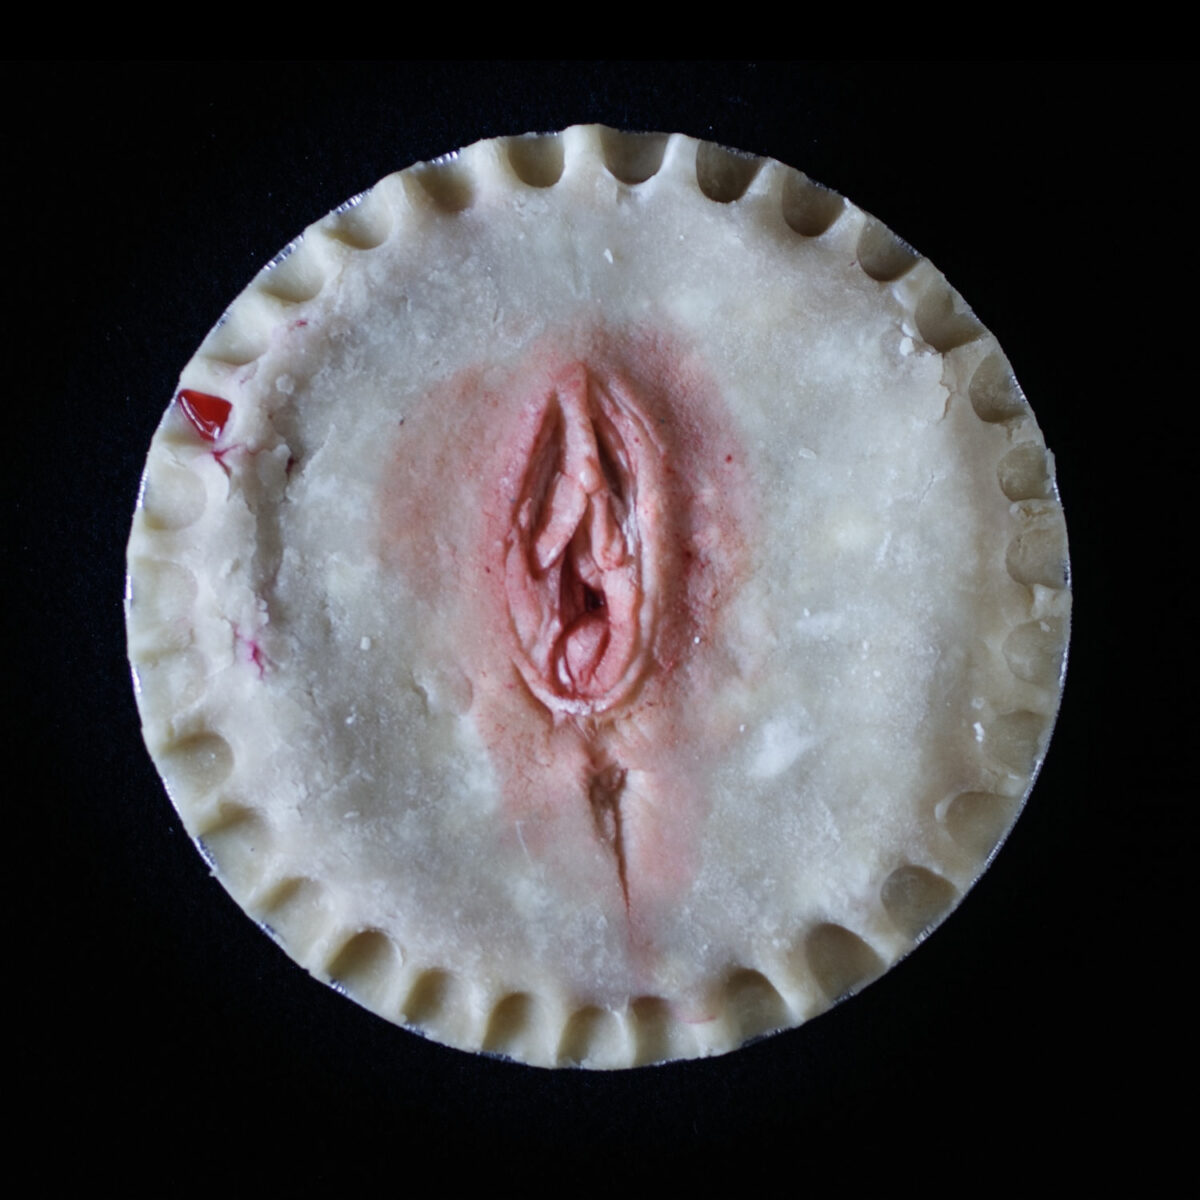 Hand made pie art that looks like a human vulva on a black background.